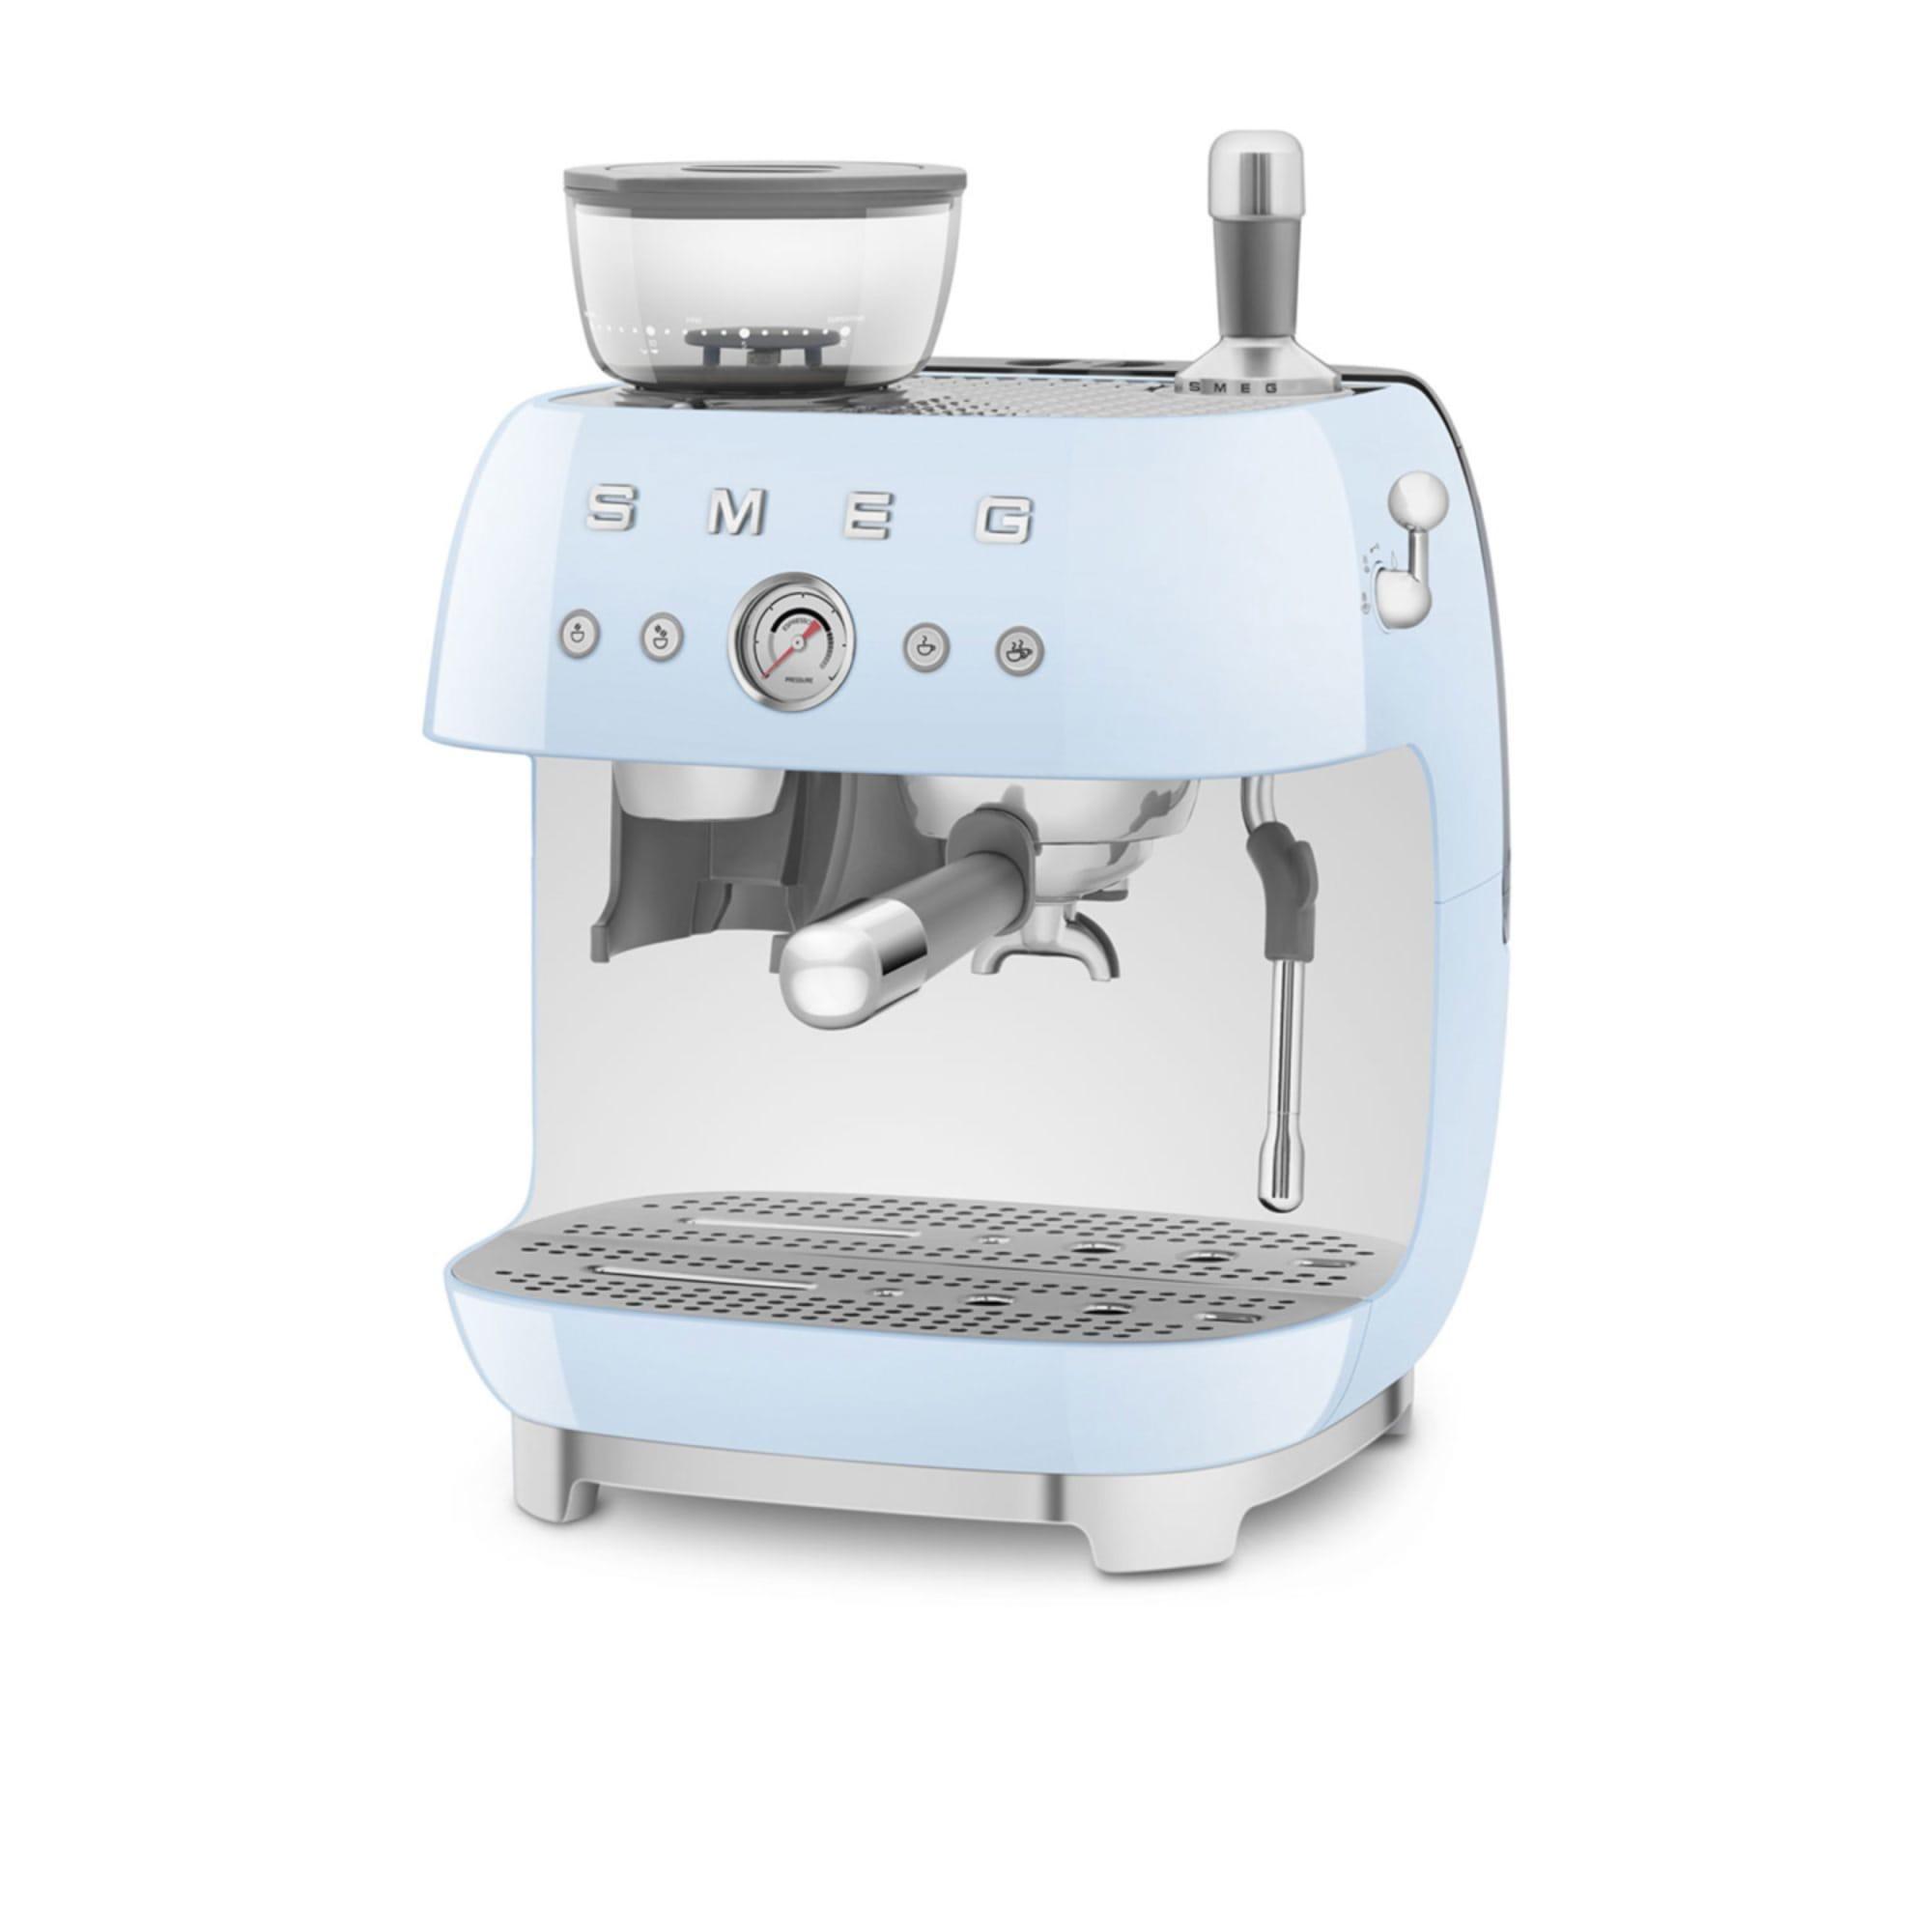 Smeg 50's Retro Style Espresso Machine with Built In Grinder Pastel Blue Image 9